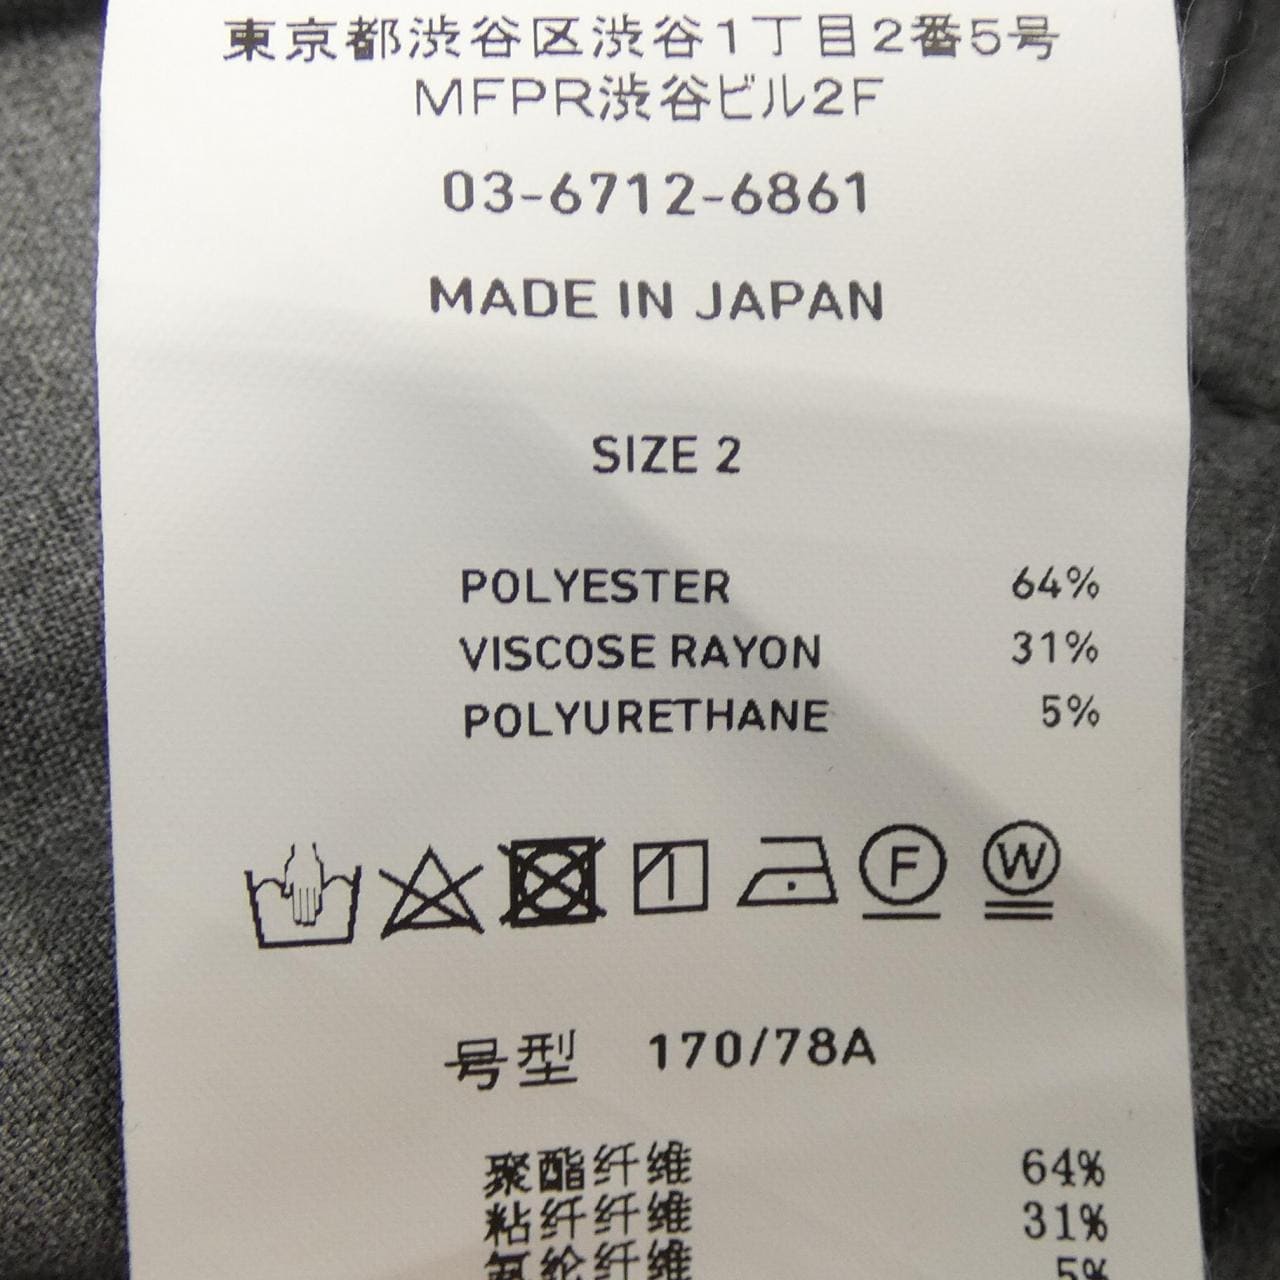 UNITED TOKYO Pants